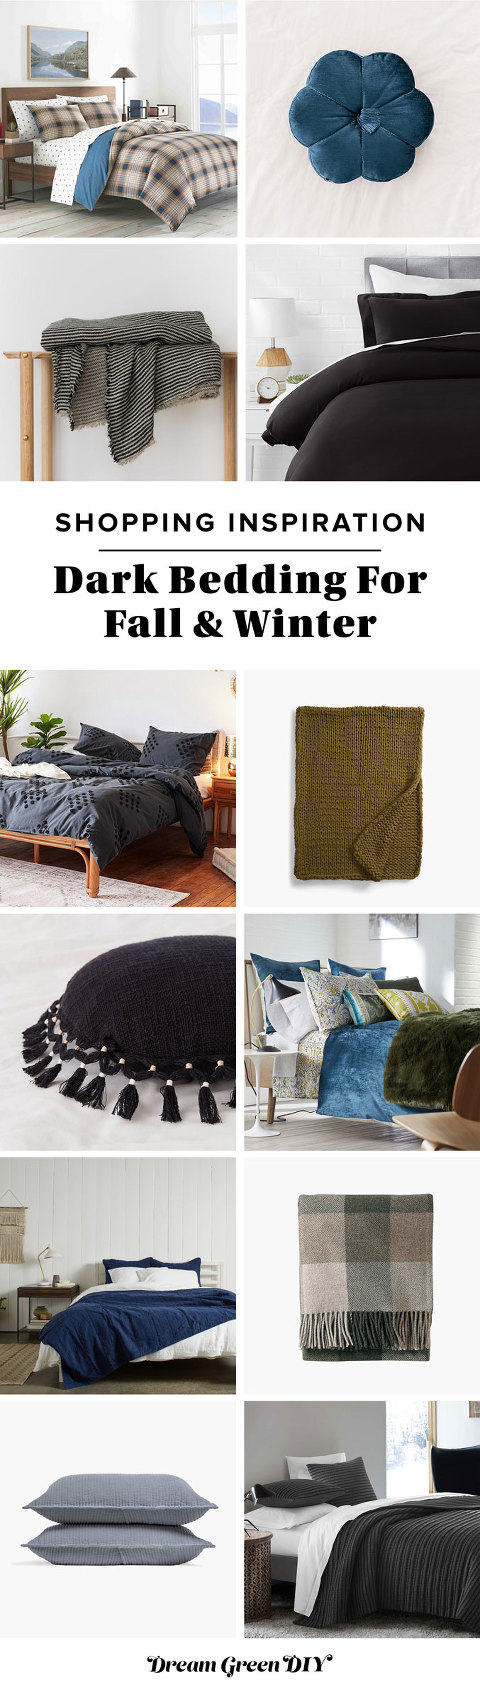 Dark Bedding For Fall & Winter